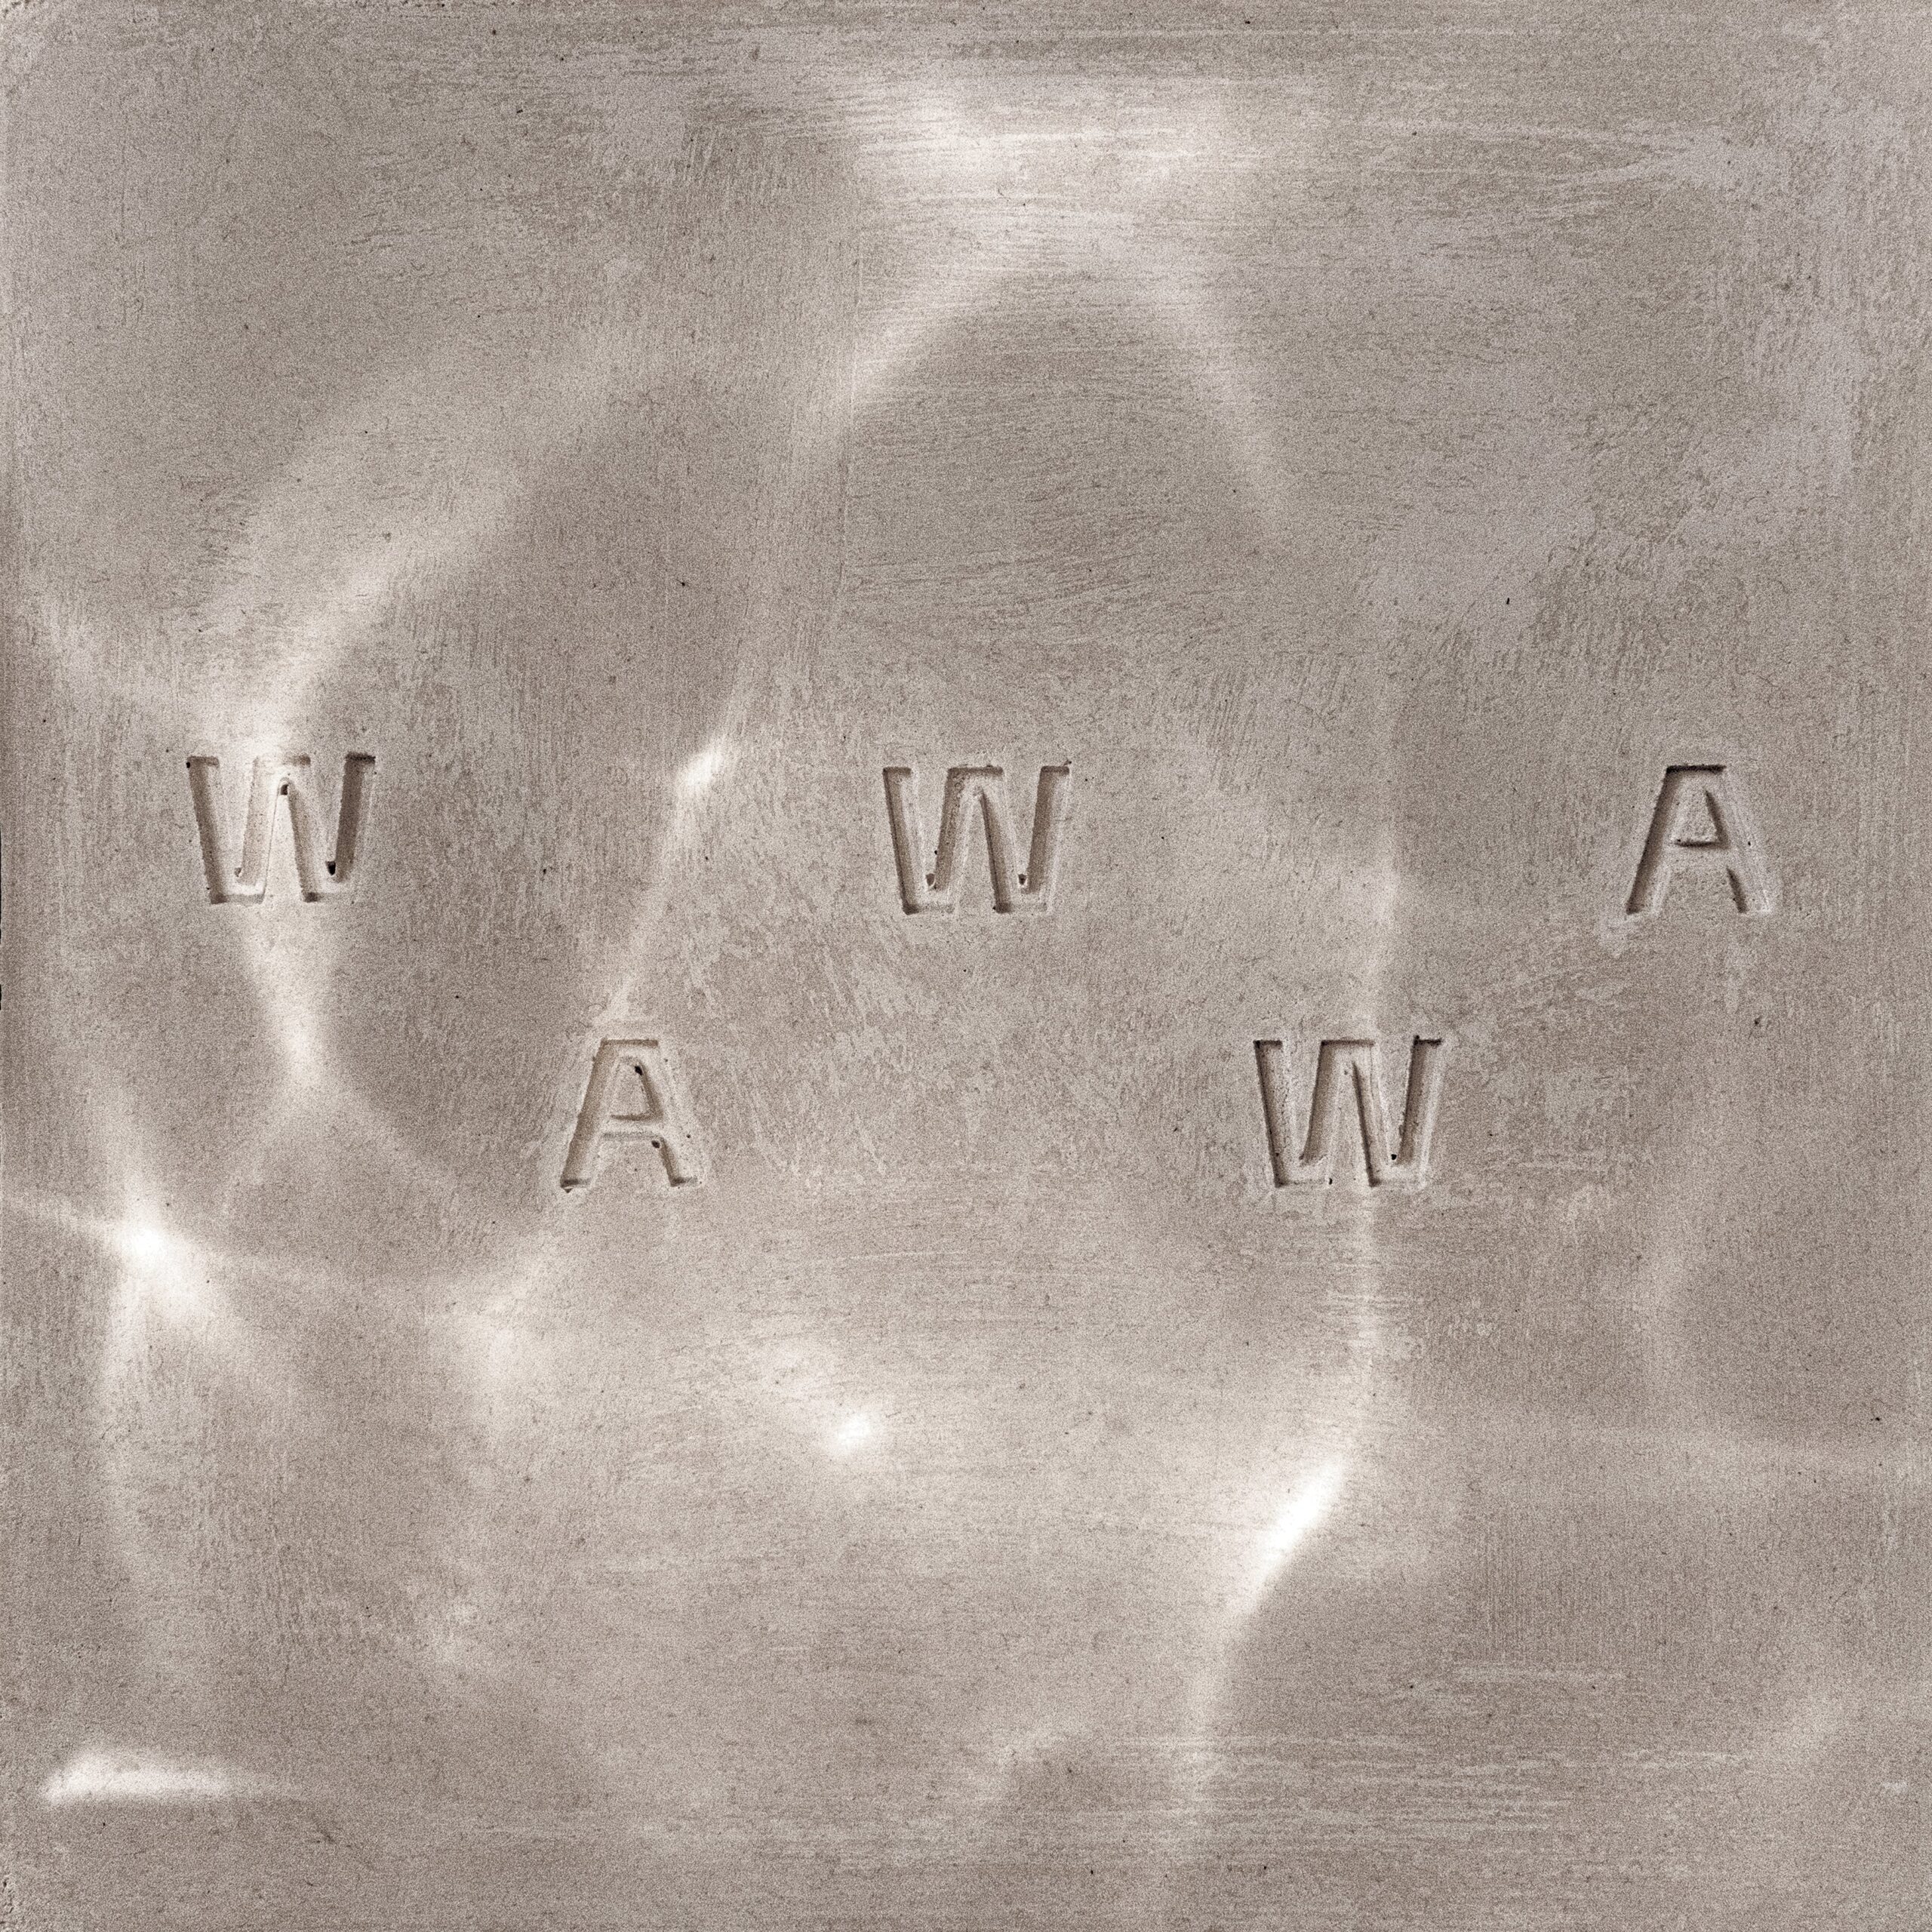 Human Colonies drop new single “WAWWA”, new album “Kintsukuroi” out September 22nd